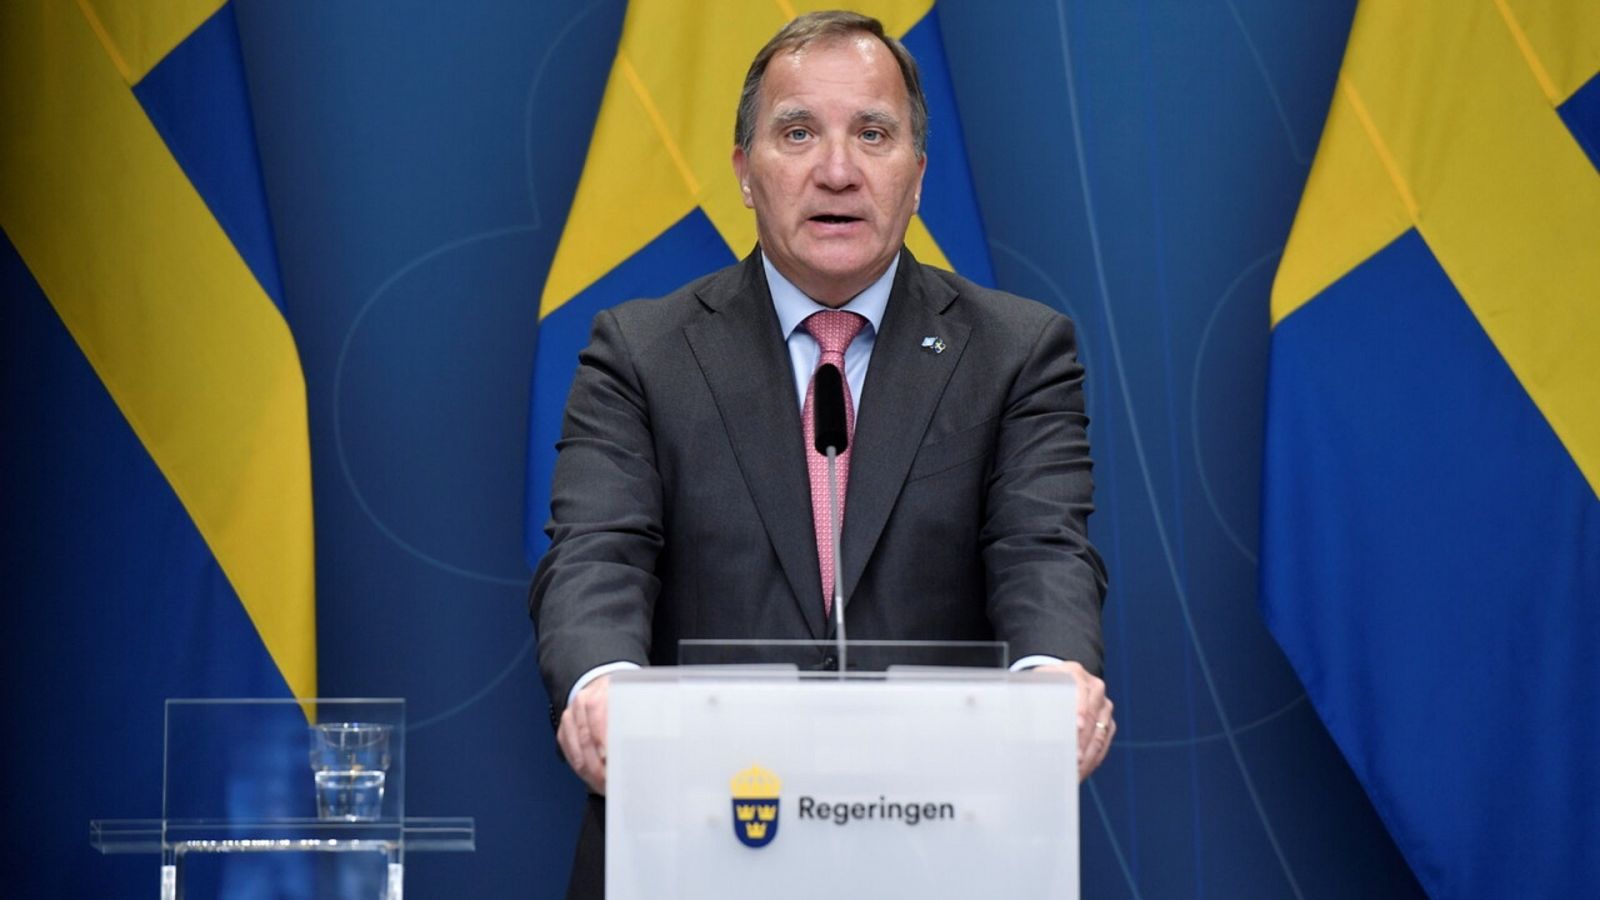 El primer ministro sueco, Stefan Löfven, presenta su dimisión. TT News Agency/Stina Stjernkvist via REUTERS 